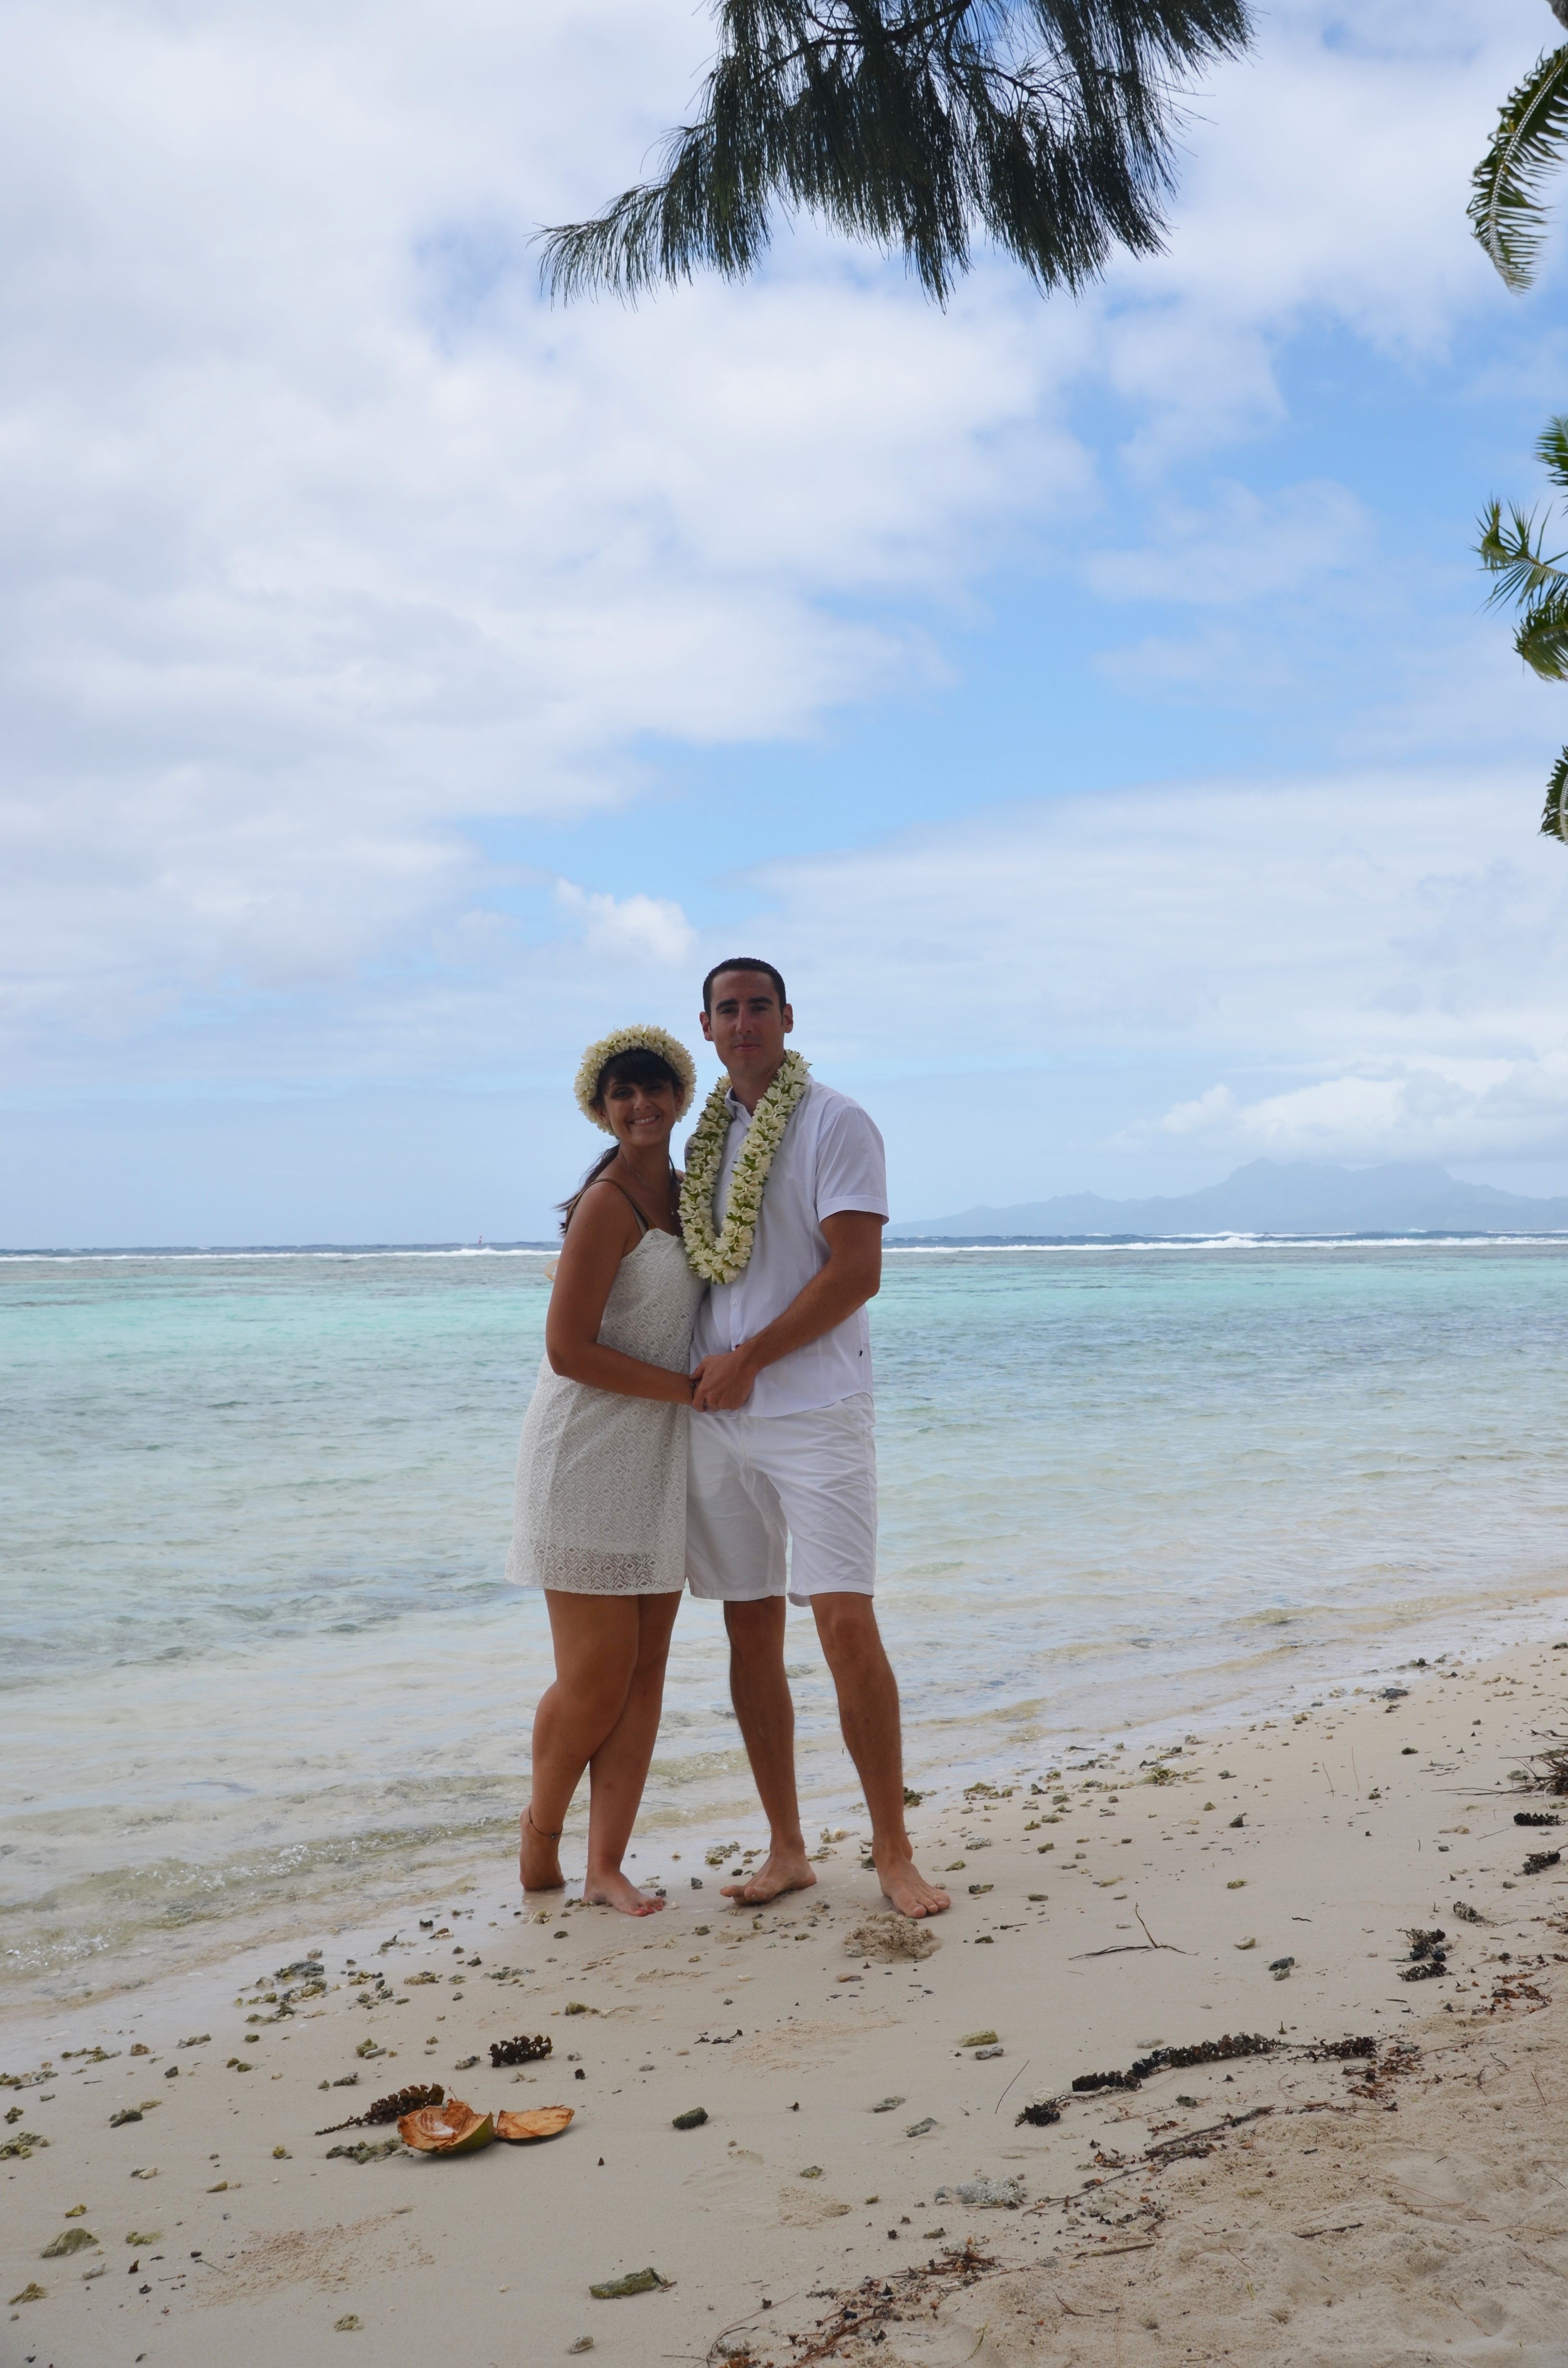 Mariage traditionnel en Polynésie
Le bonheur